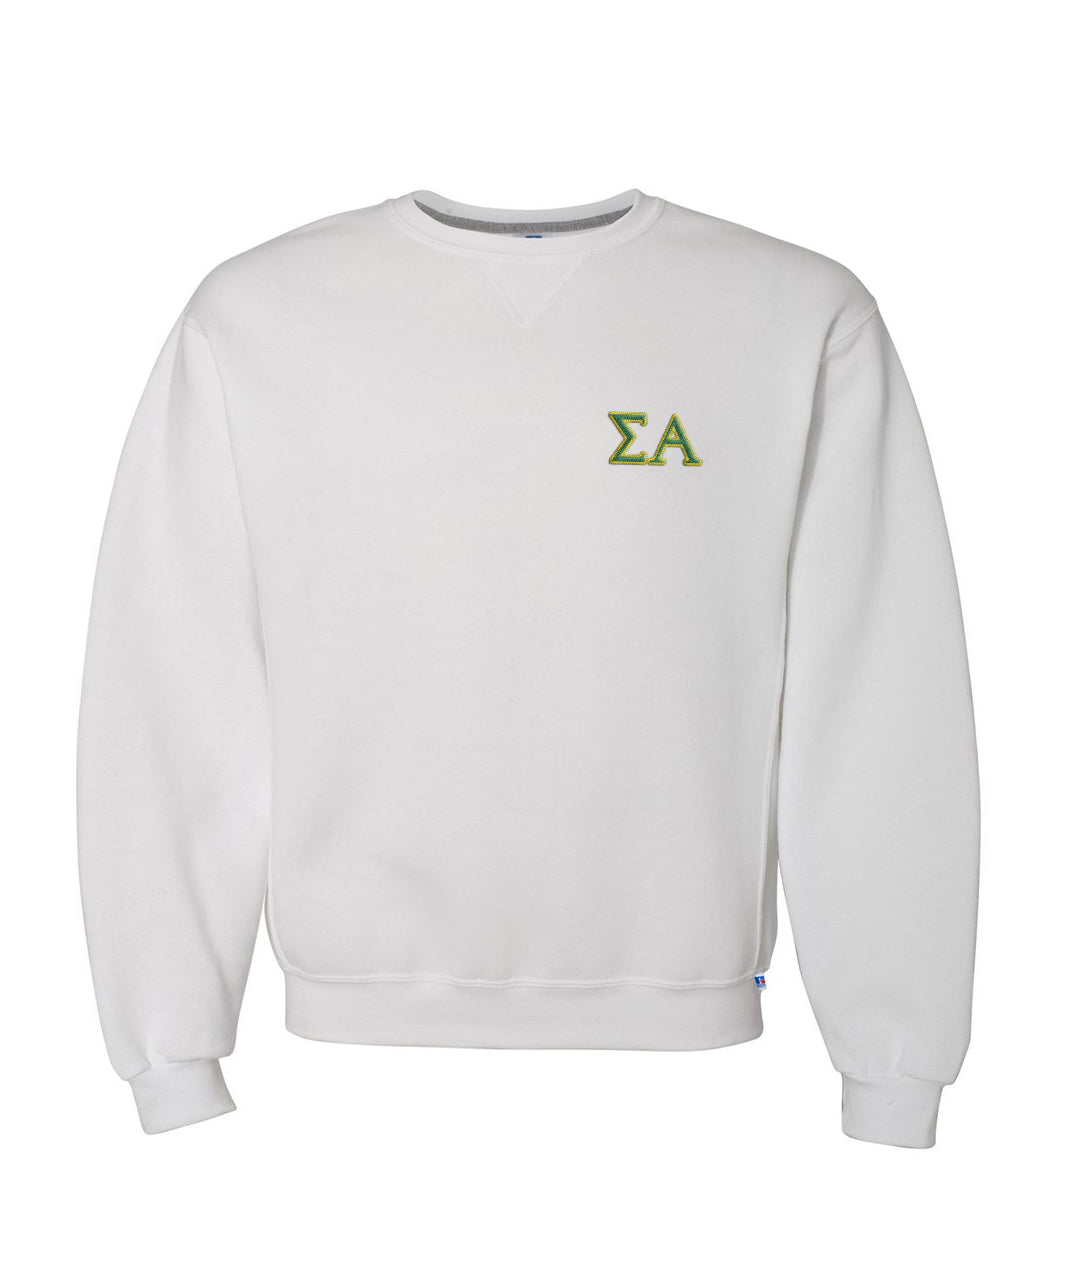 Sigma Alpha Embroidered Crewneck Sweatshirt